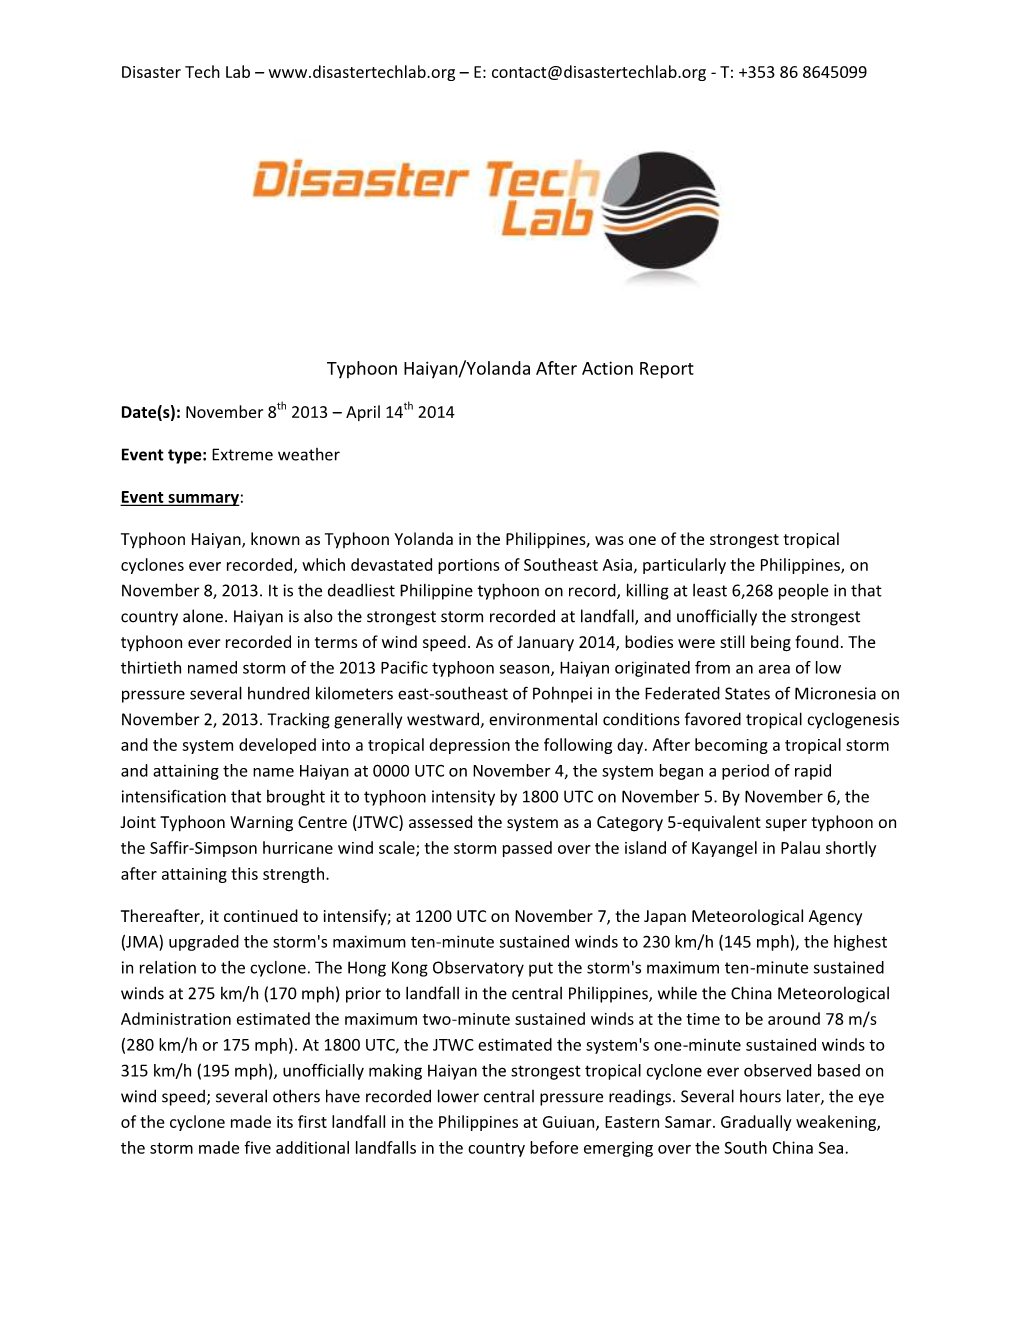 Typhoon Haiyan/Yolanda After Action Report